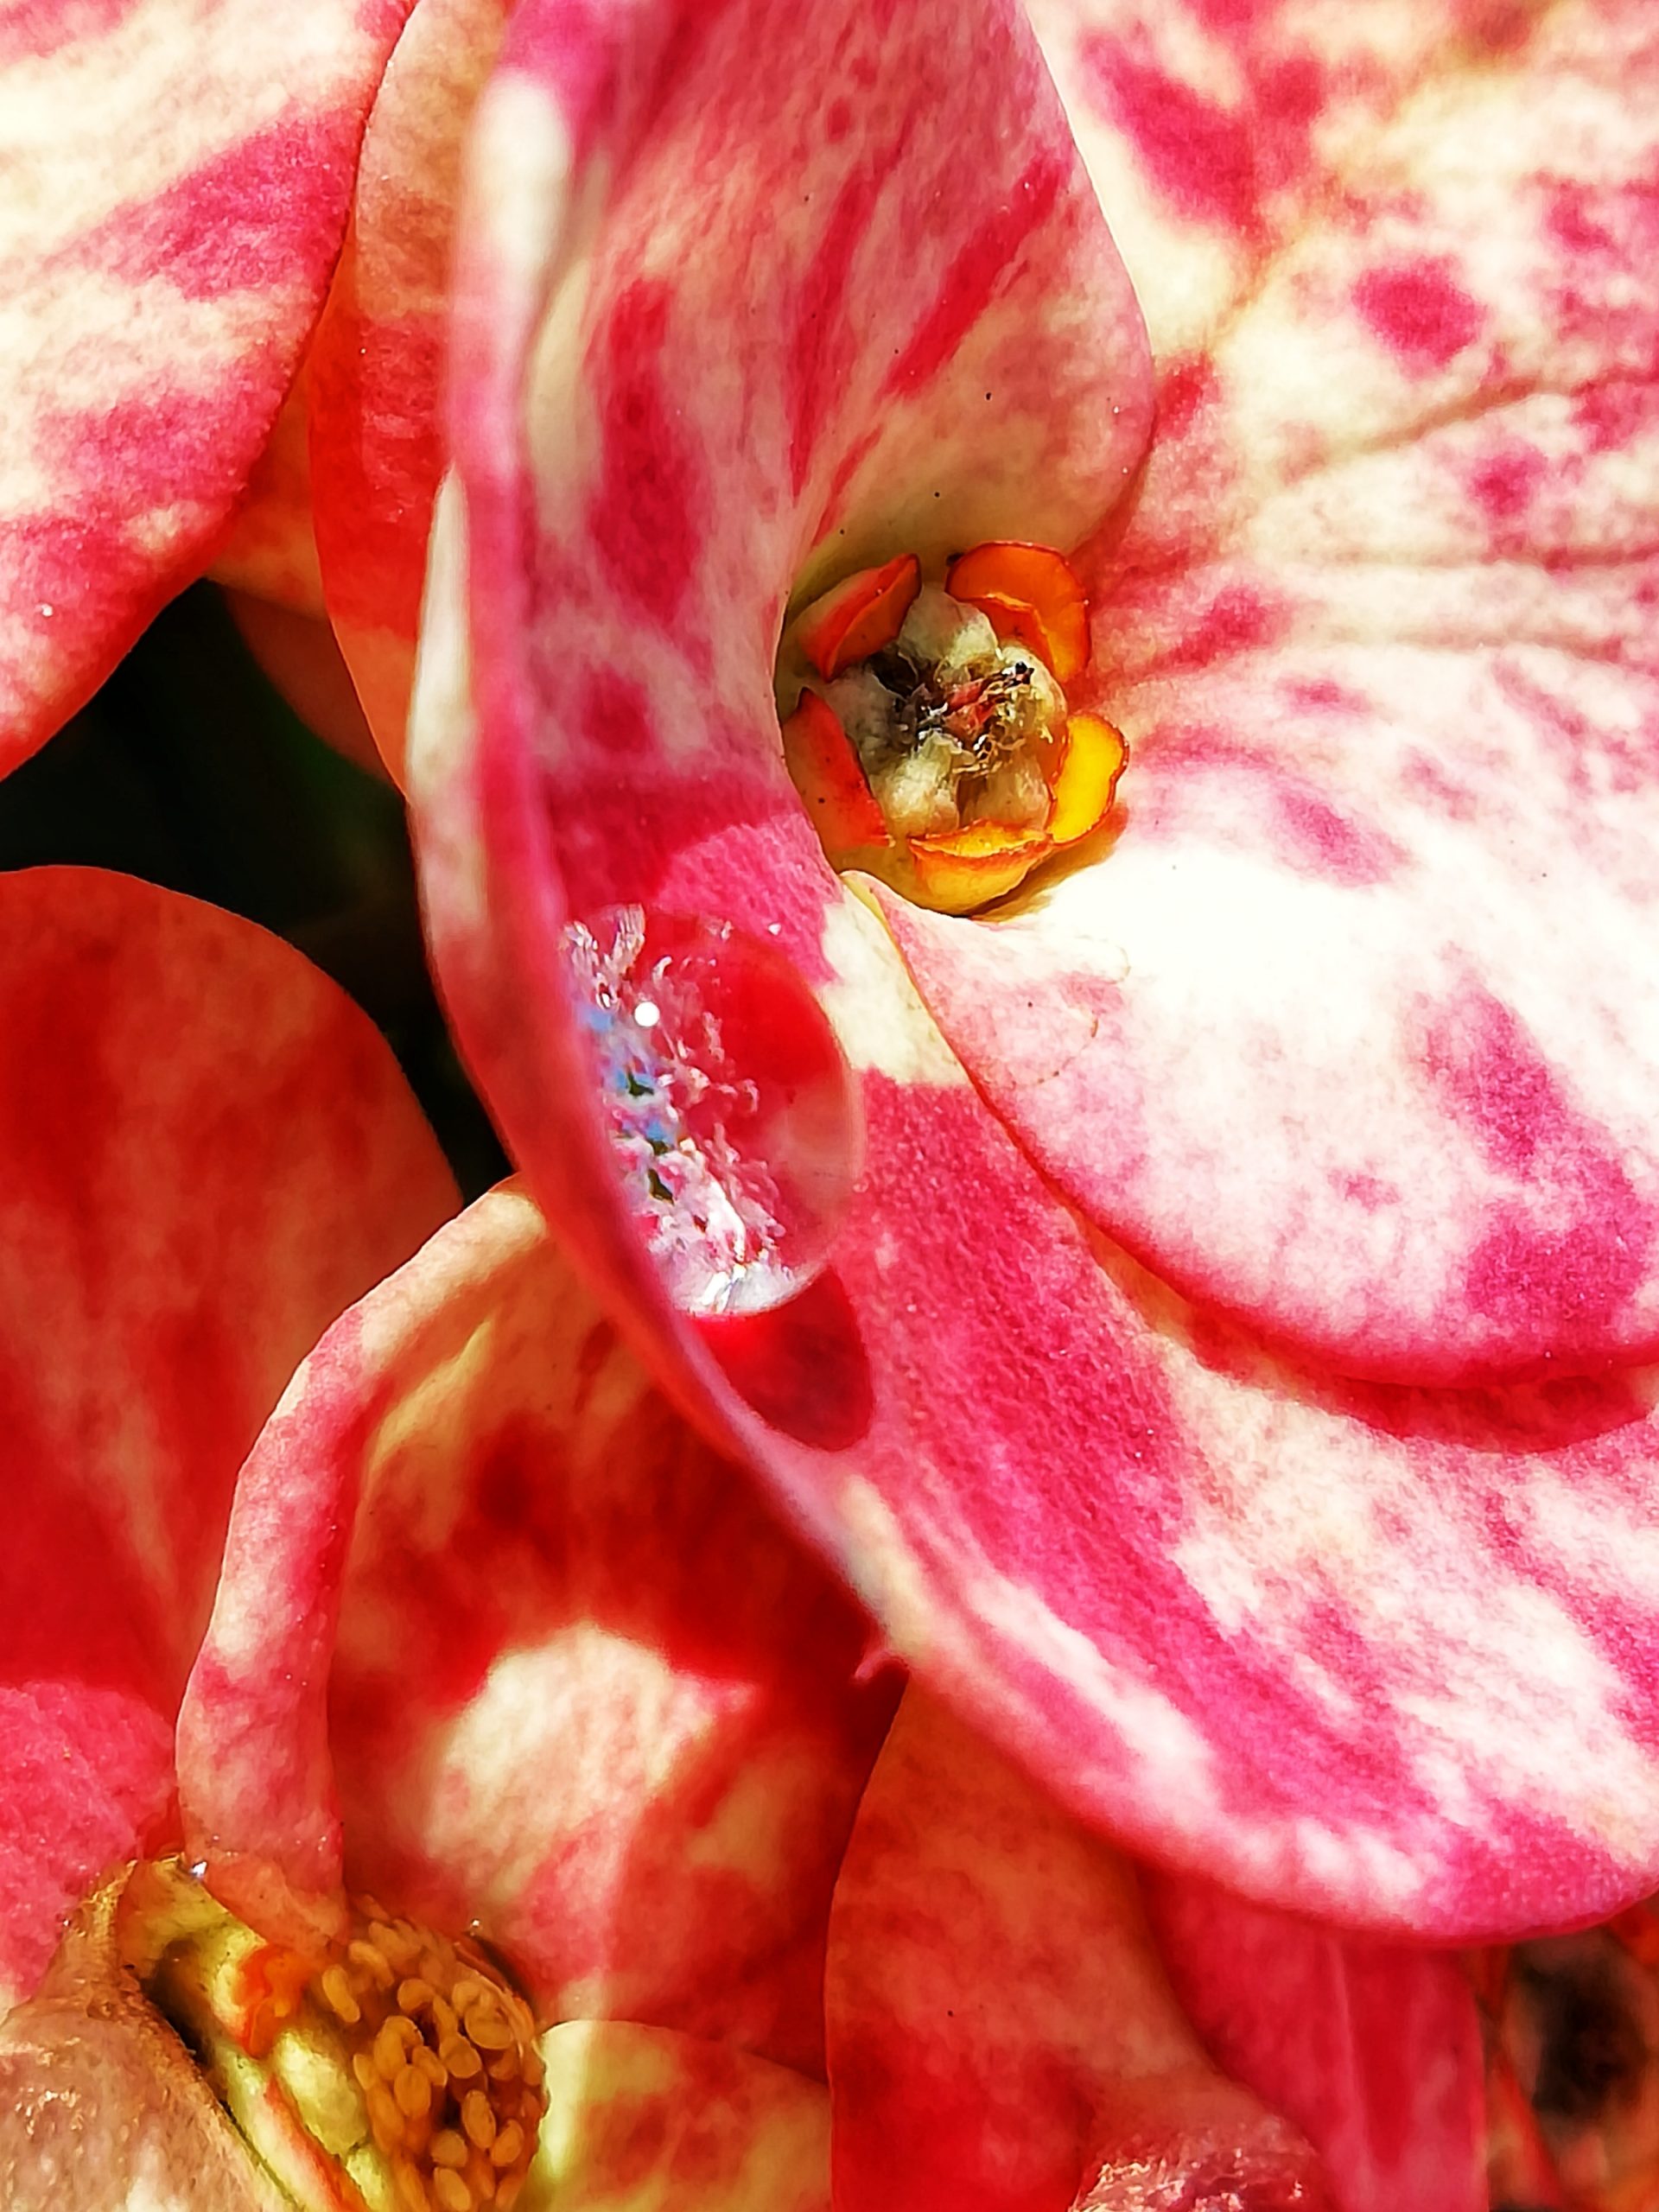 Dew drops on a flower